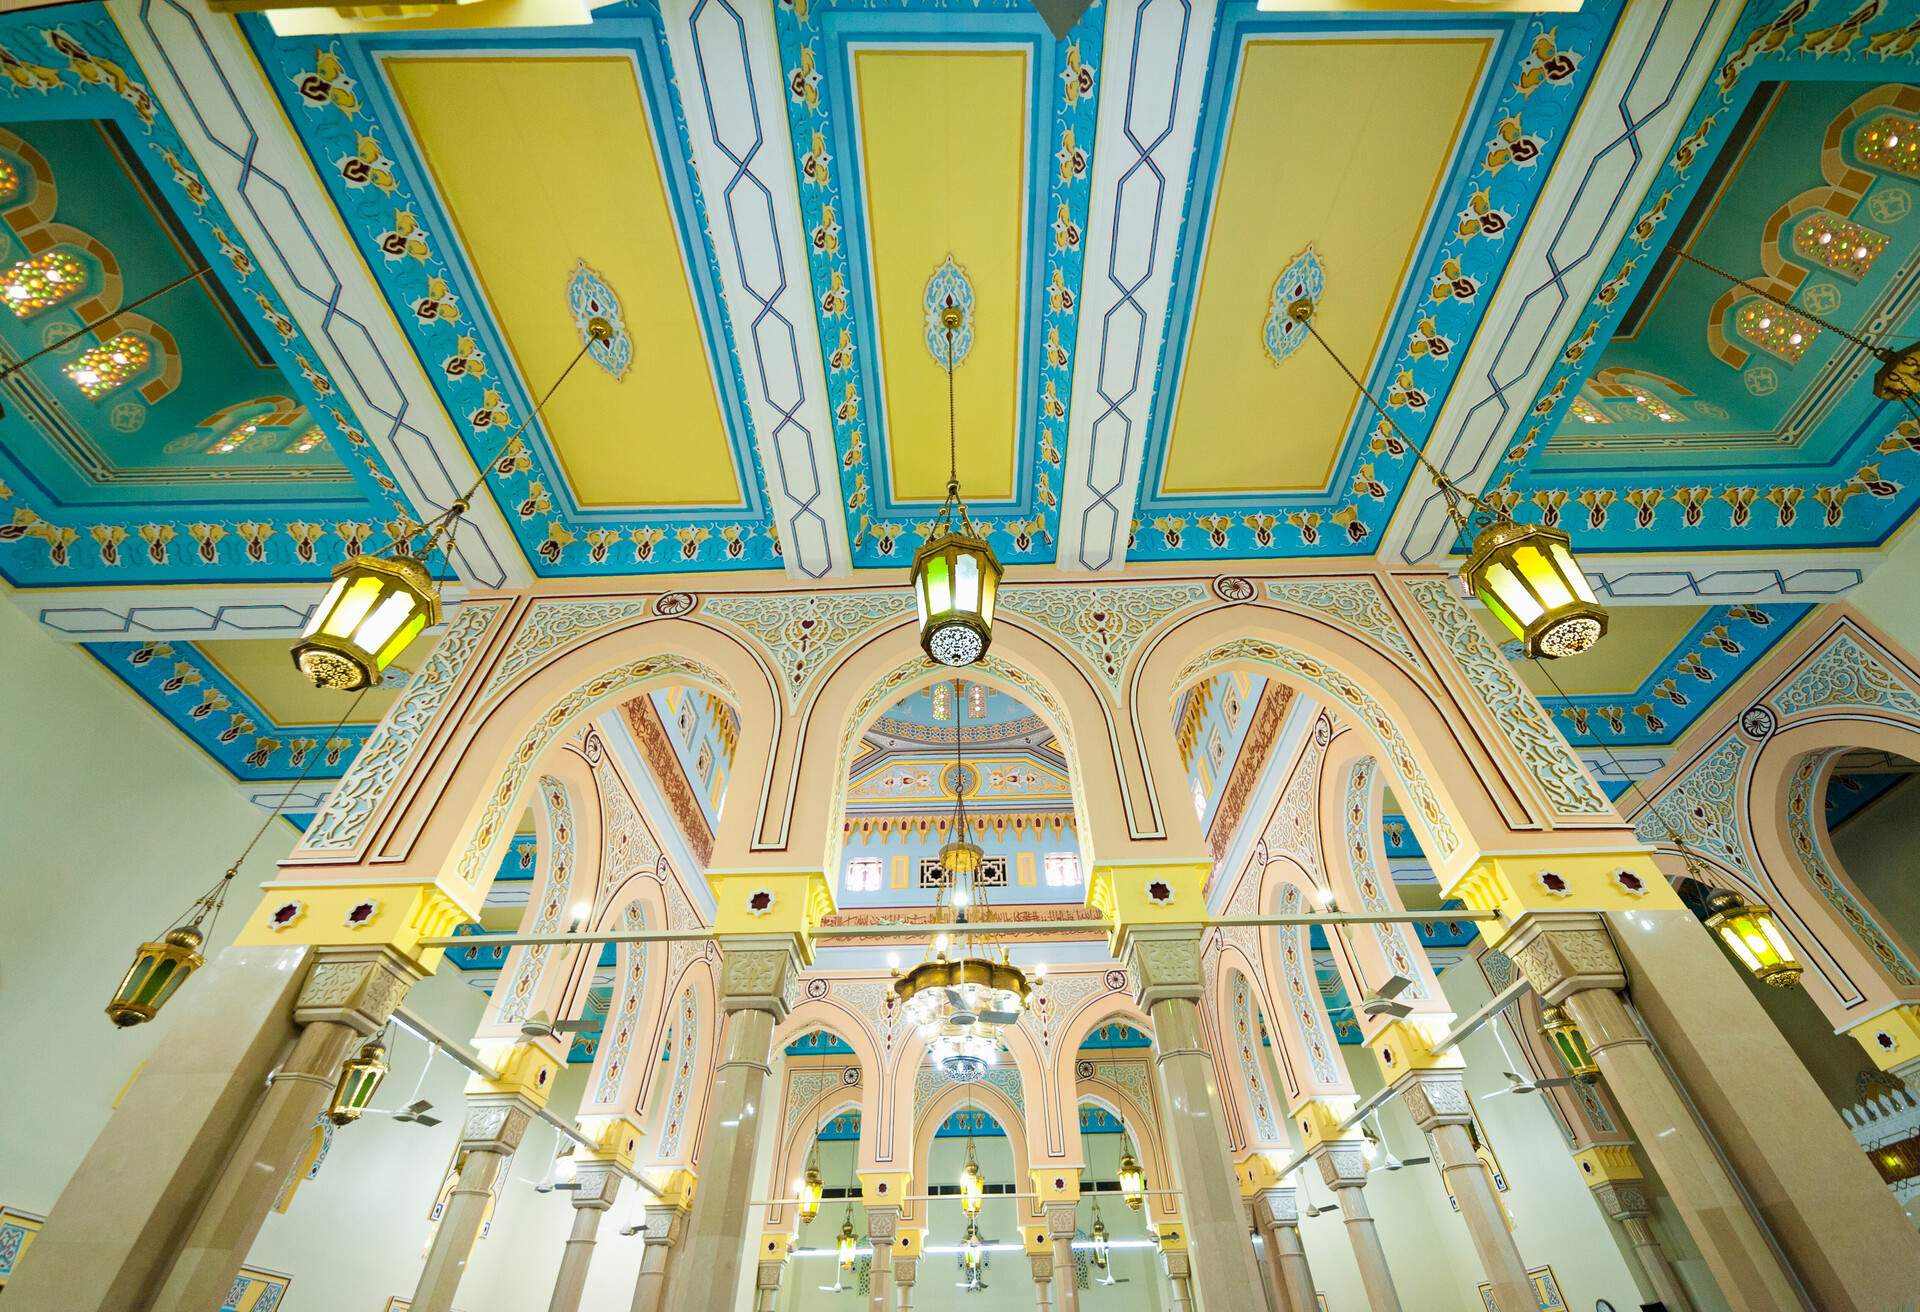 Interior detail of the Jumeirah Mosque in Dubai.